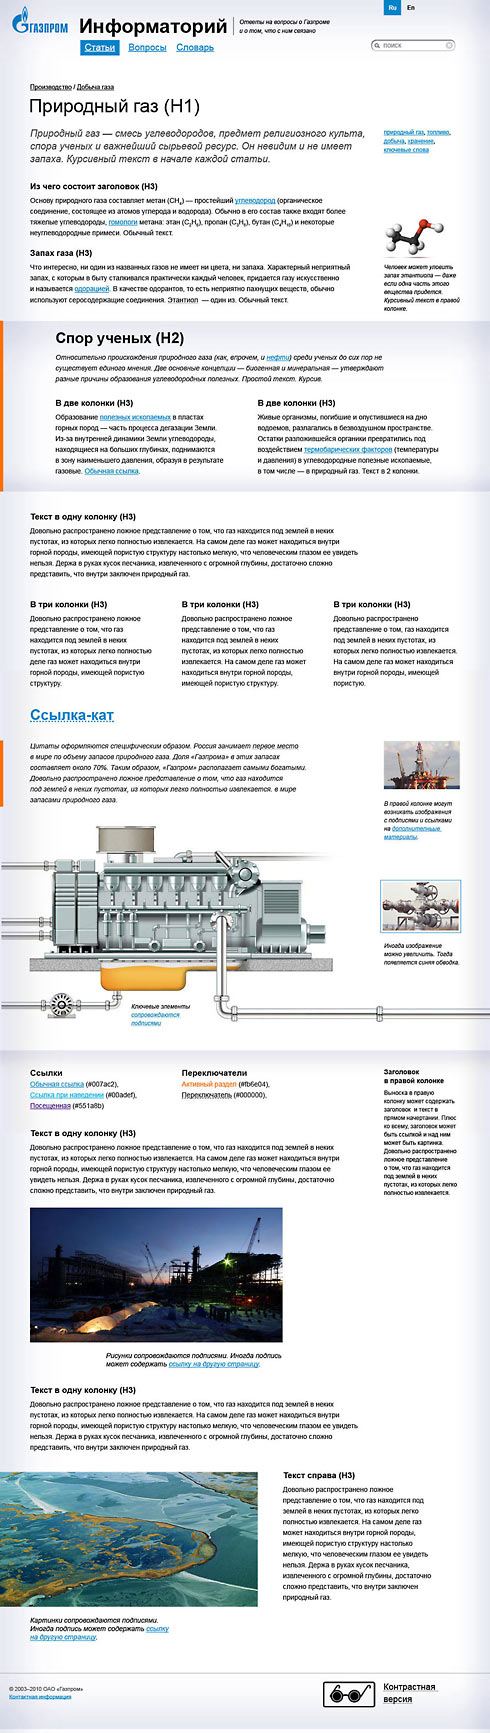 gazprom info process 10